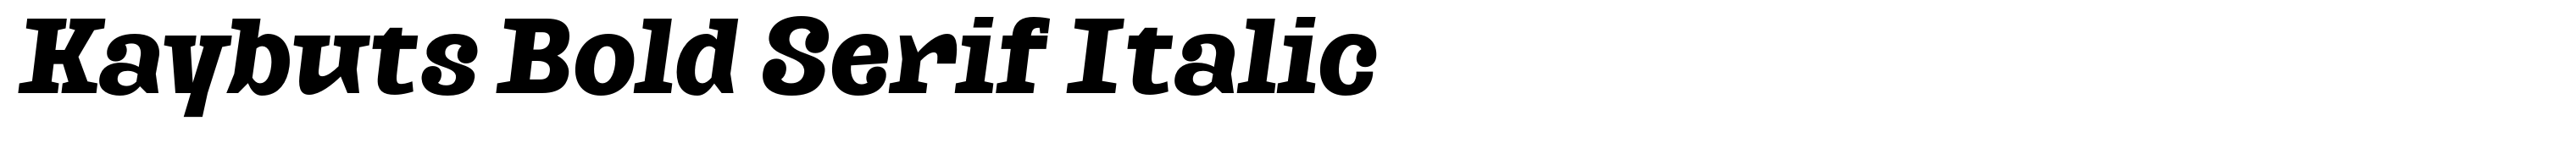 Kaybuts Bold Serif Italic